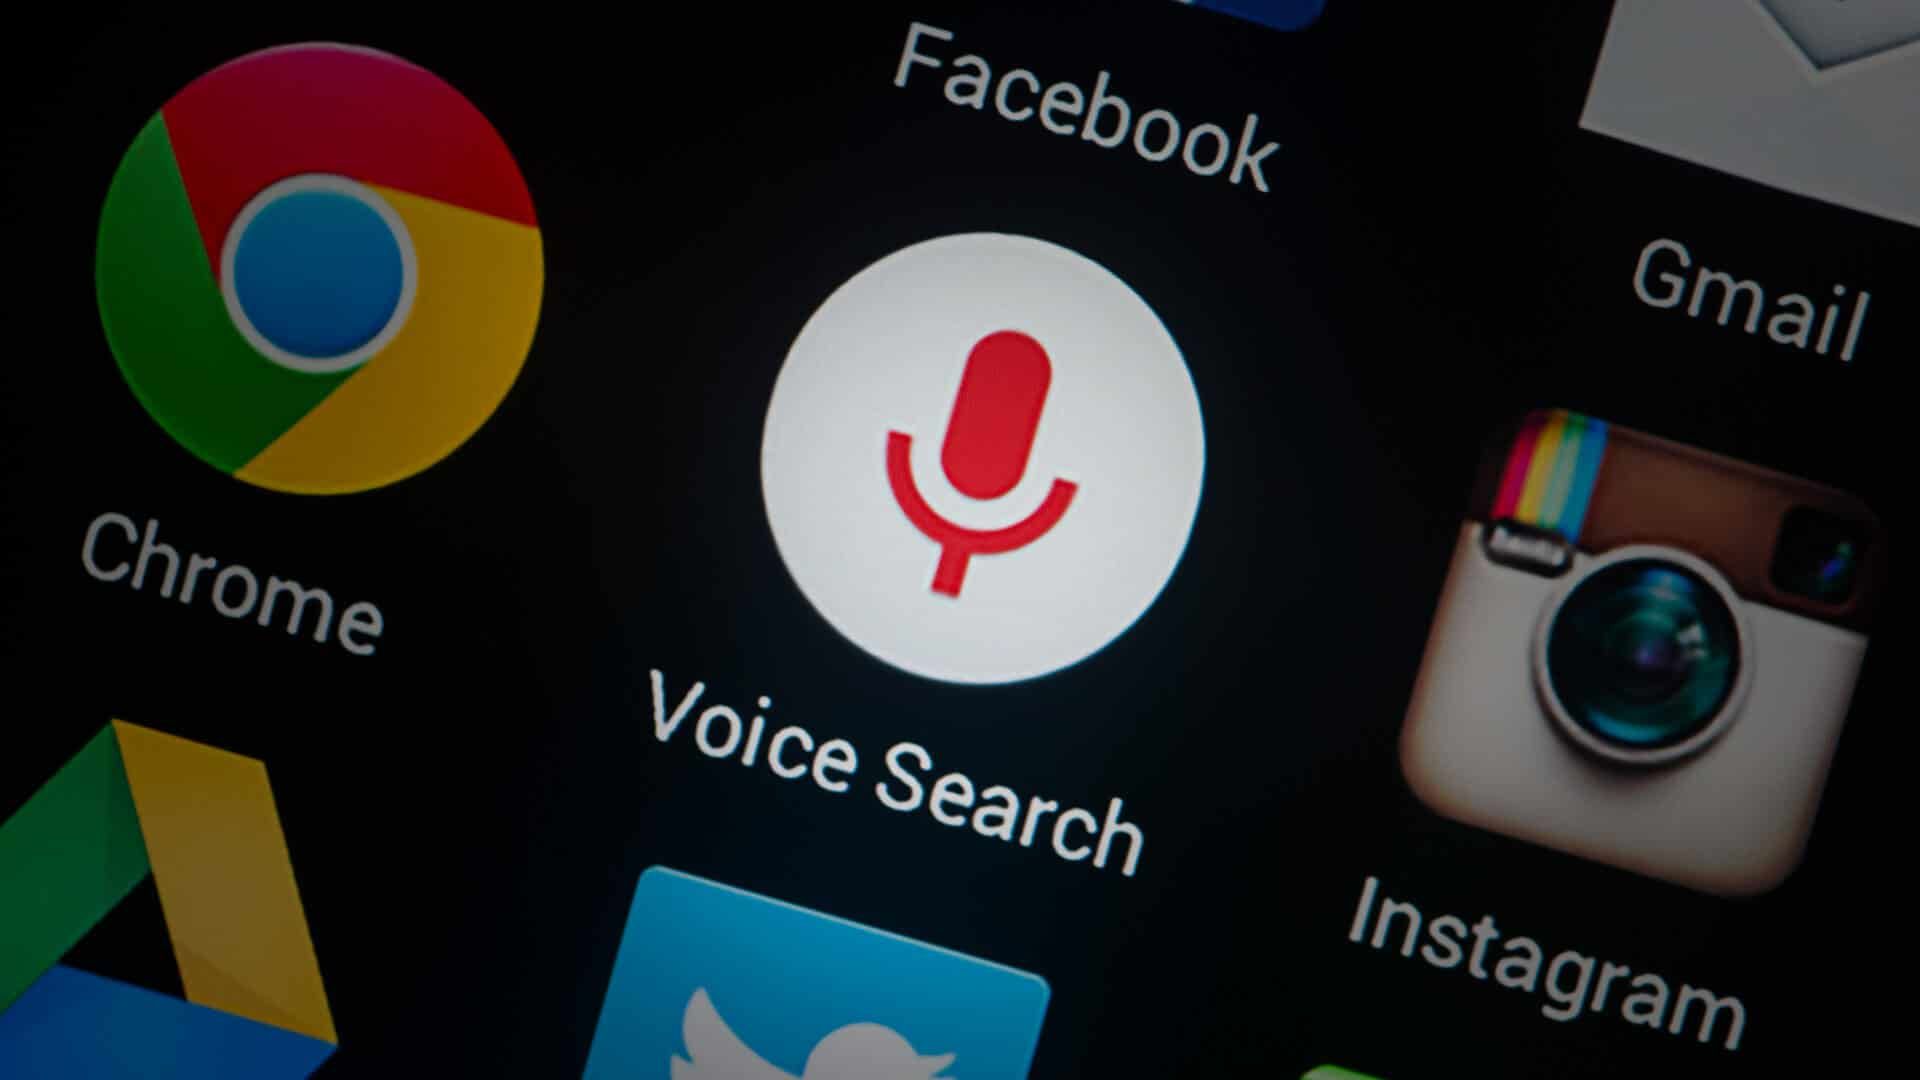 voice search vs. text search